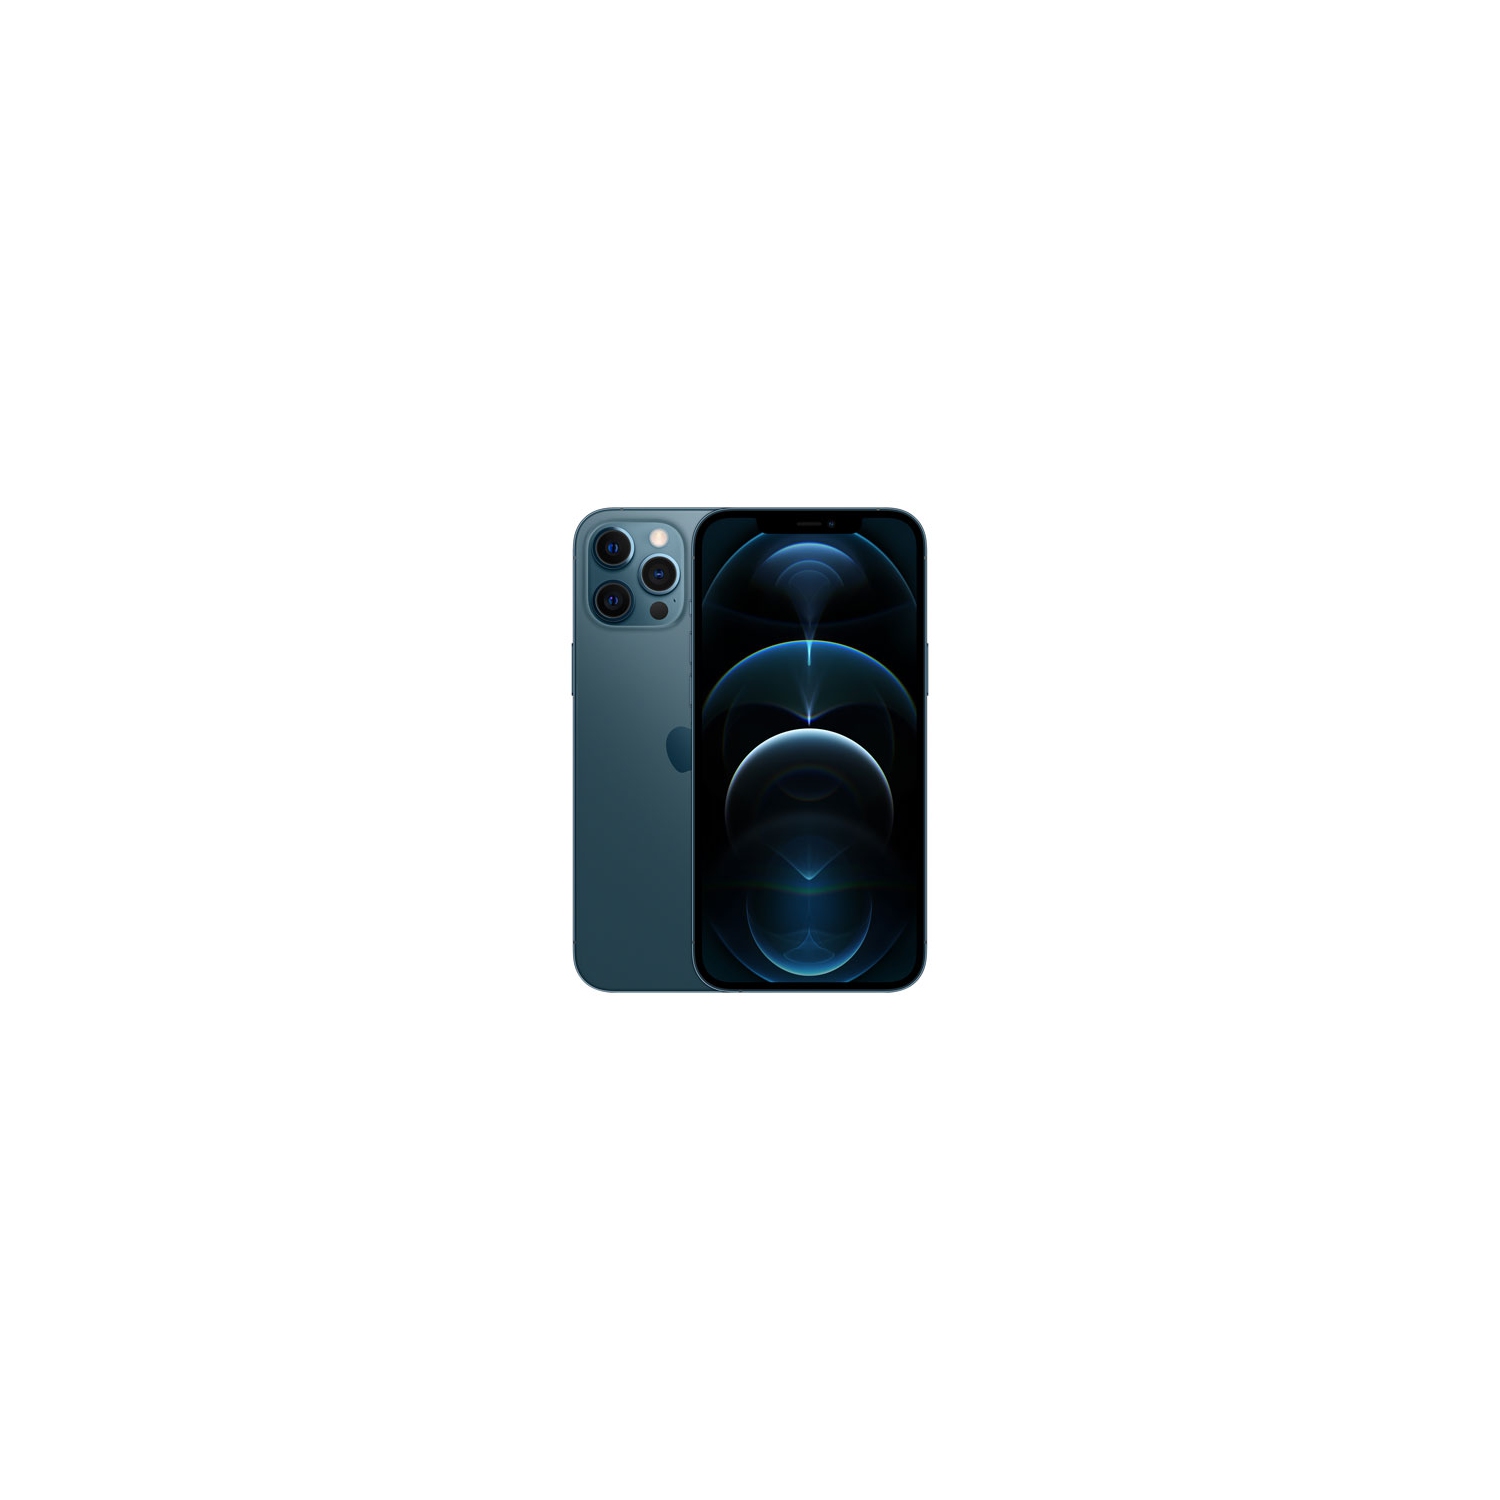 Refurbished (Good) - Apple iPhone 12 Pro Max 512GB Smartphone - Pacific Blue - Unlocked